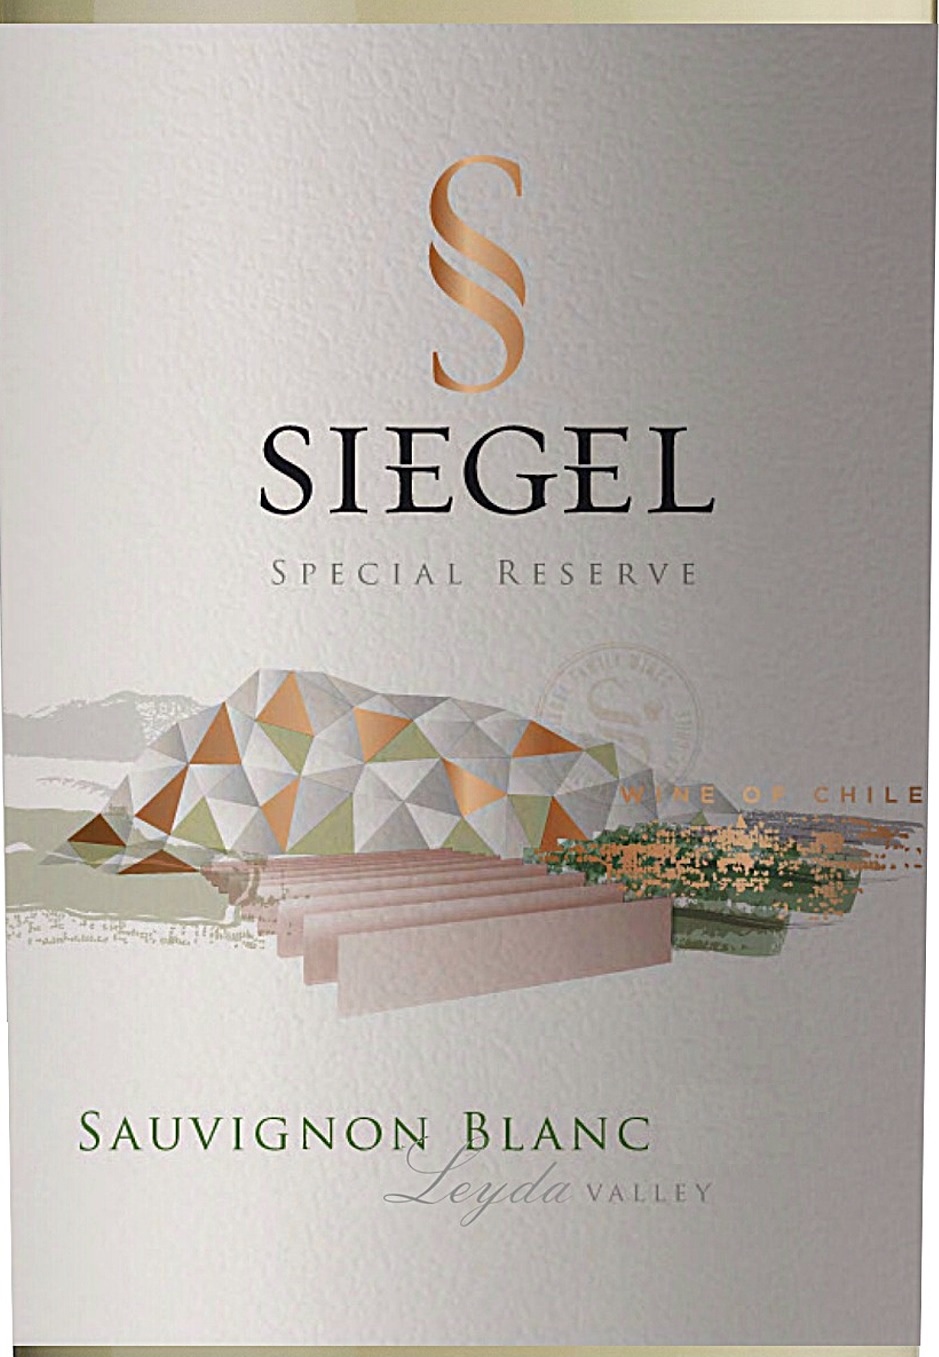 Bán rượu Siegel Special Reserve Savignon Blanc